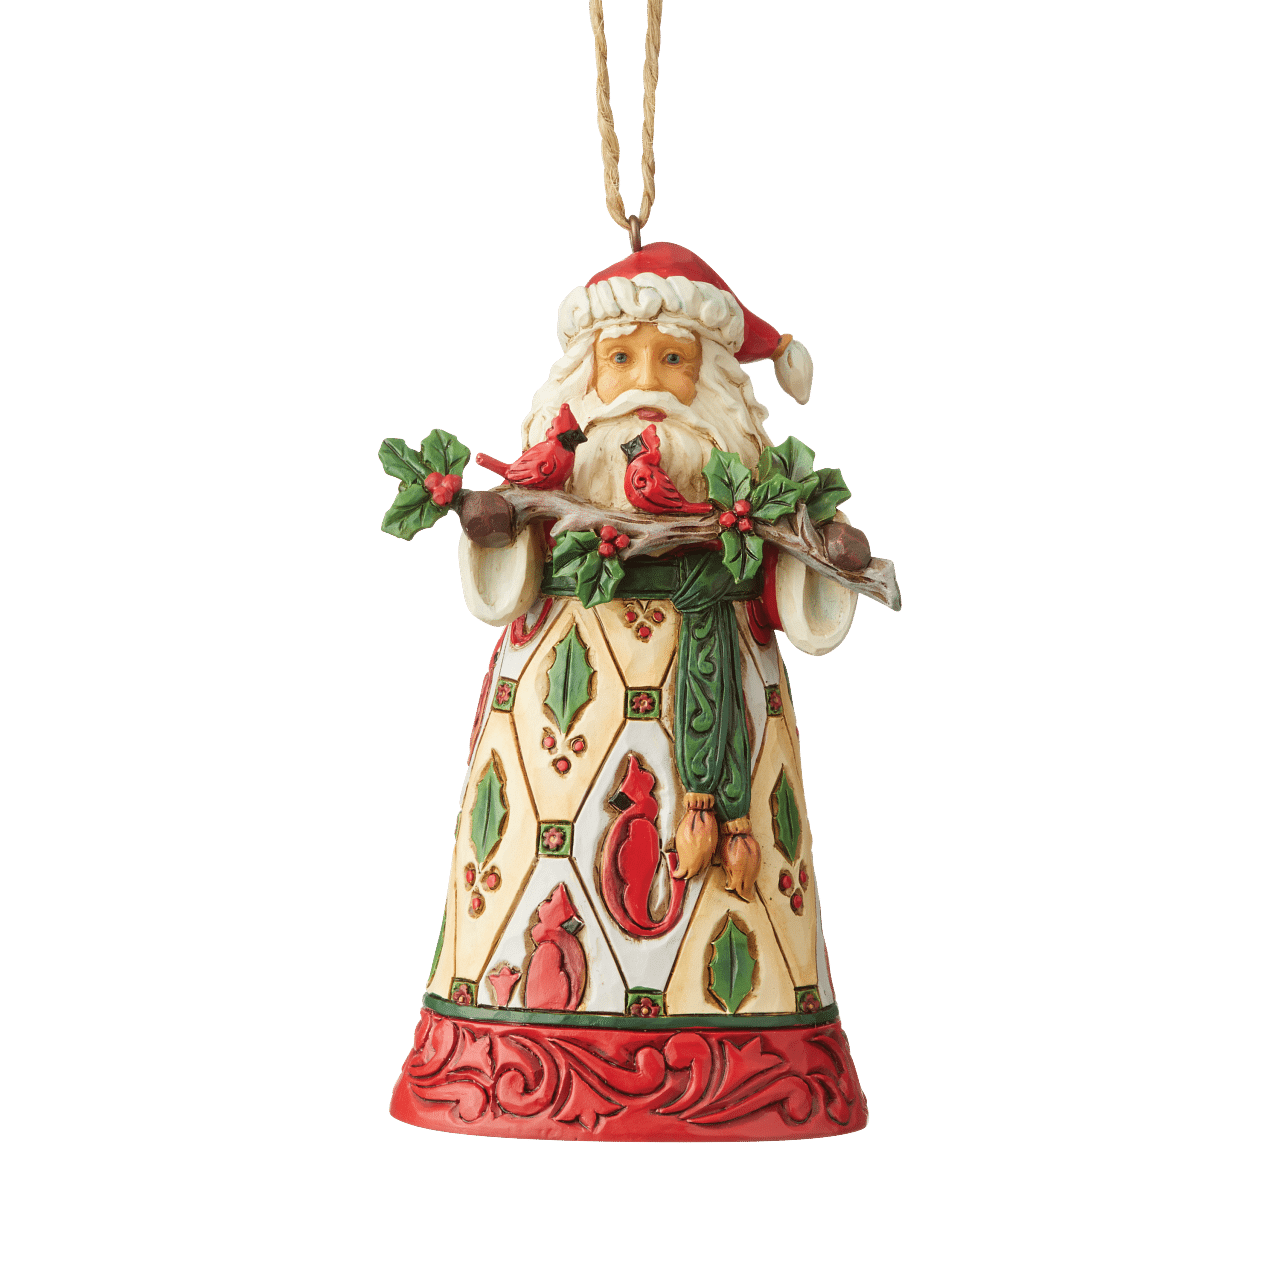 Santa with Cardinals Ornament - Kringles Christmas Shop